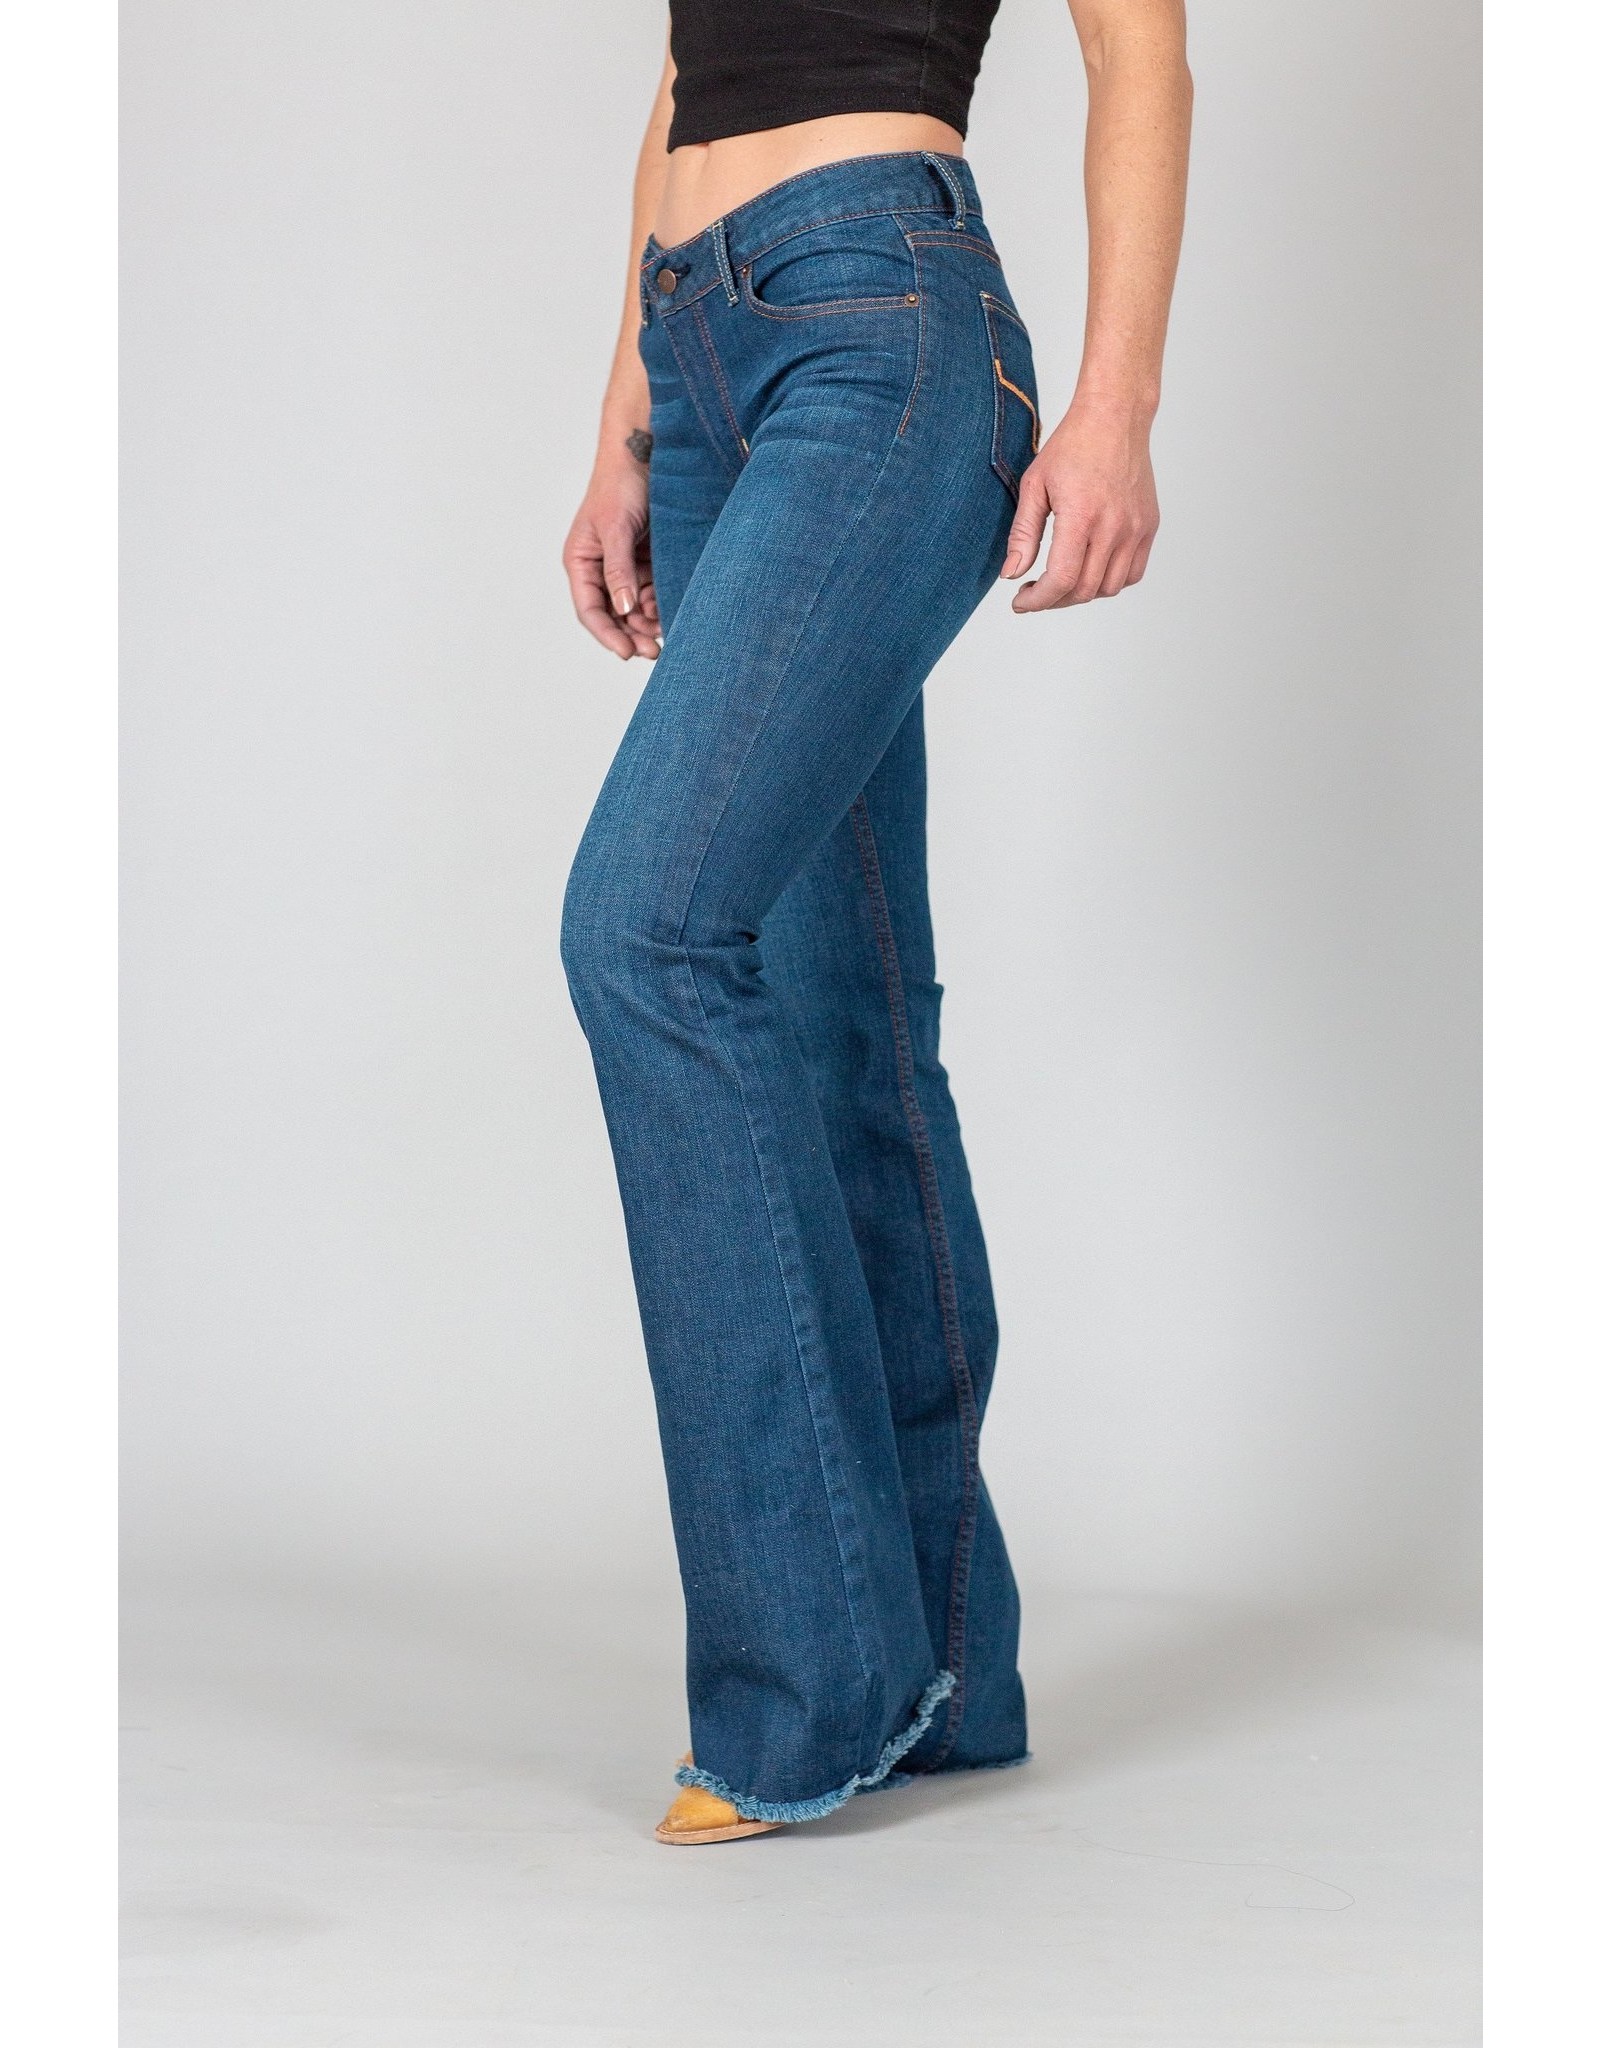 Jeans-Womens KIMES RANCH Lola